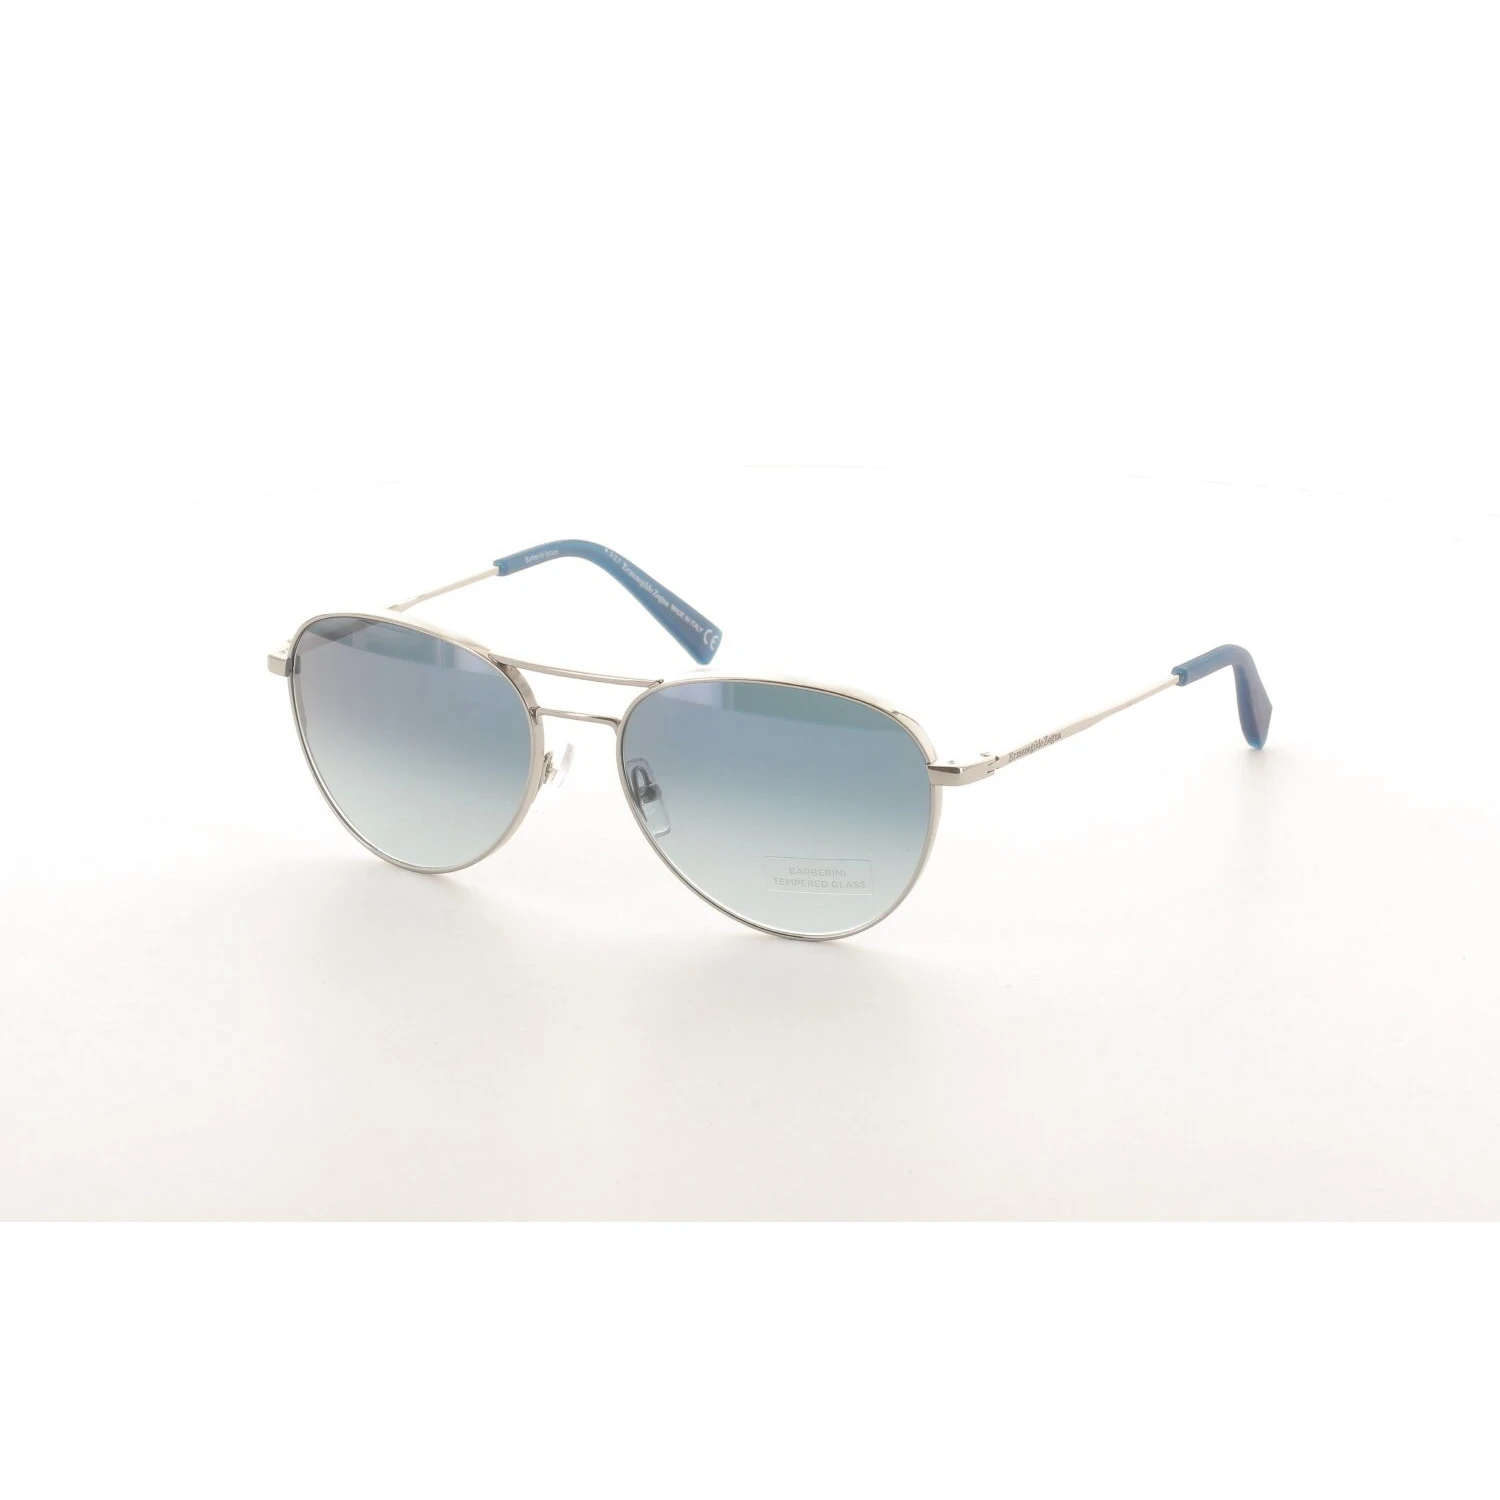 

Unisex sunglasses ez 0098 14w metal silver crystal drop aval 56-17-140 ermenegildo zegna